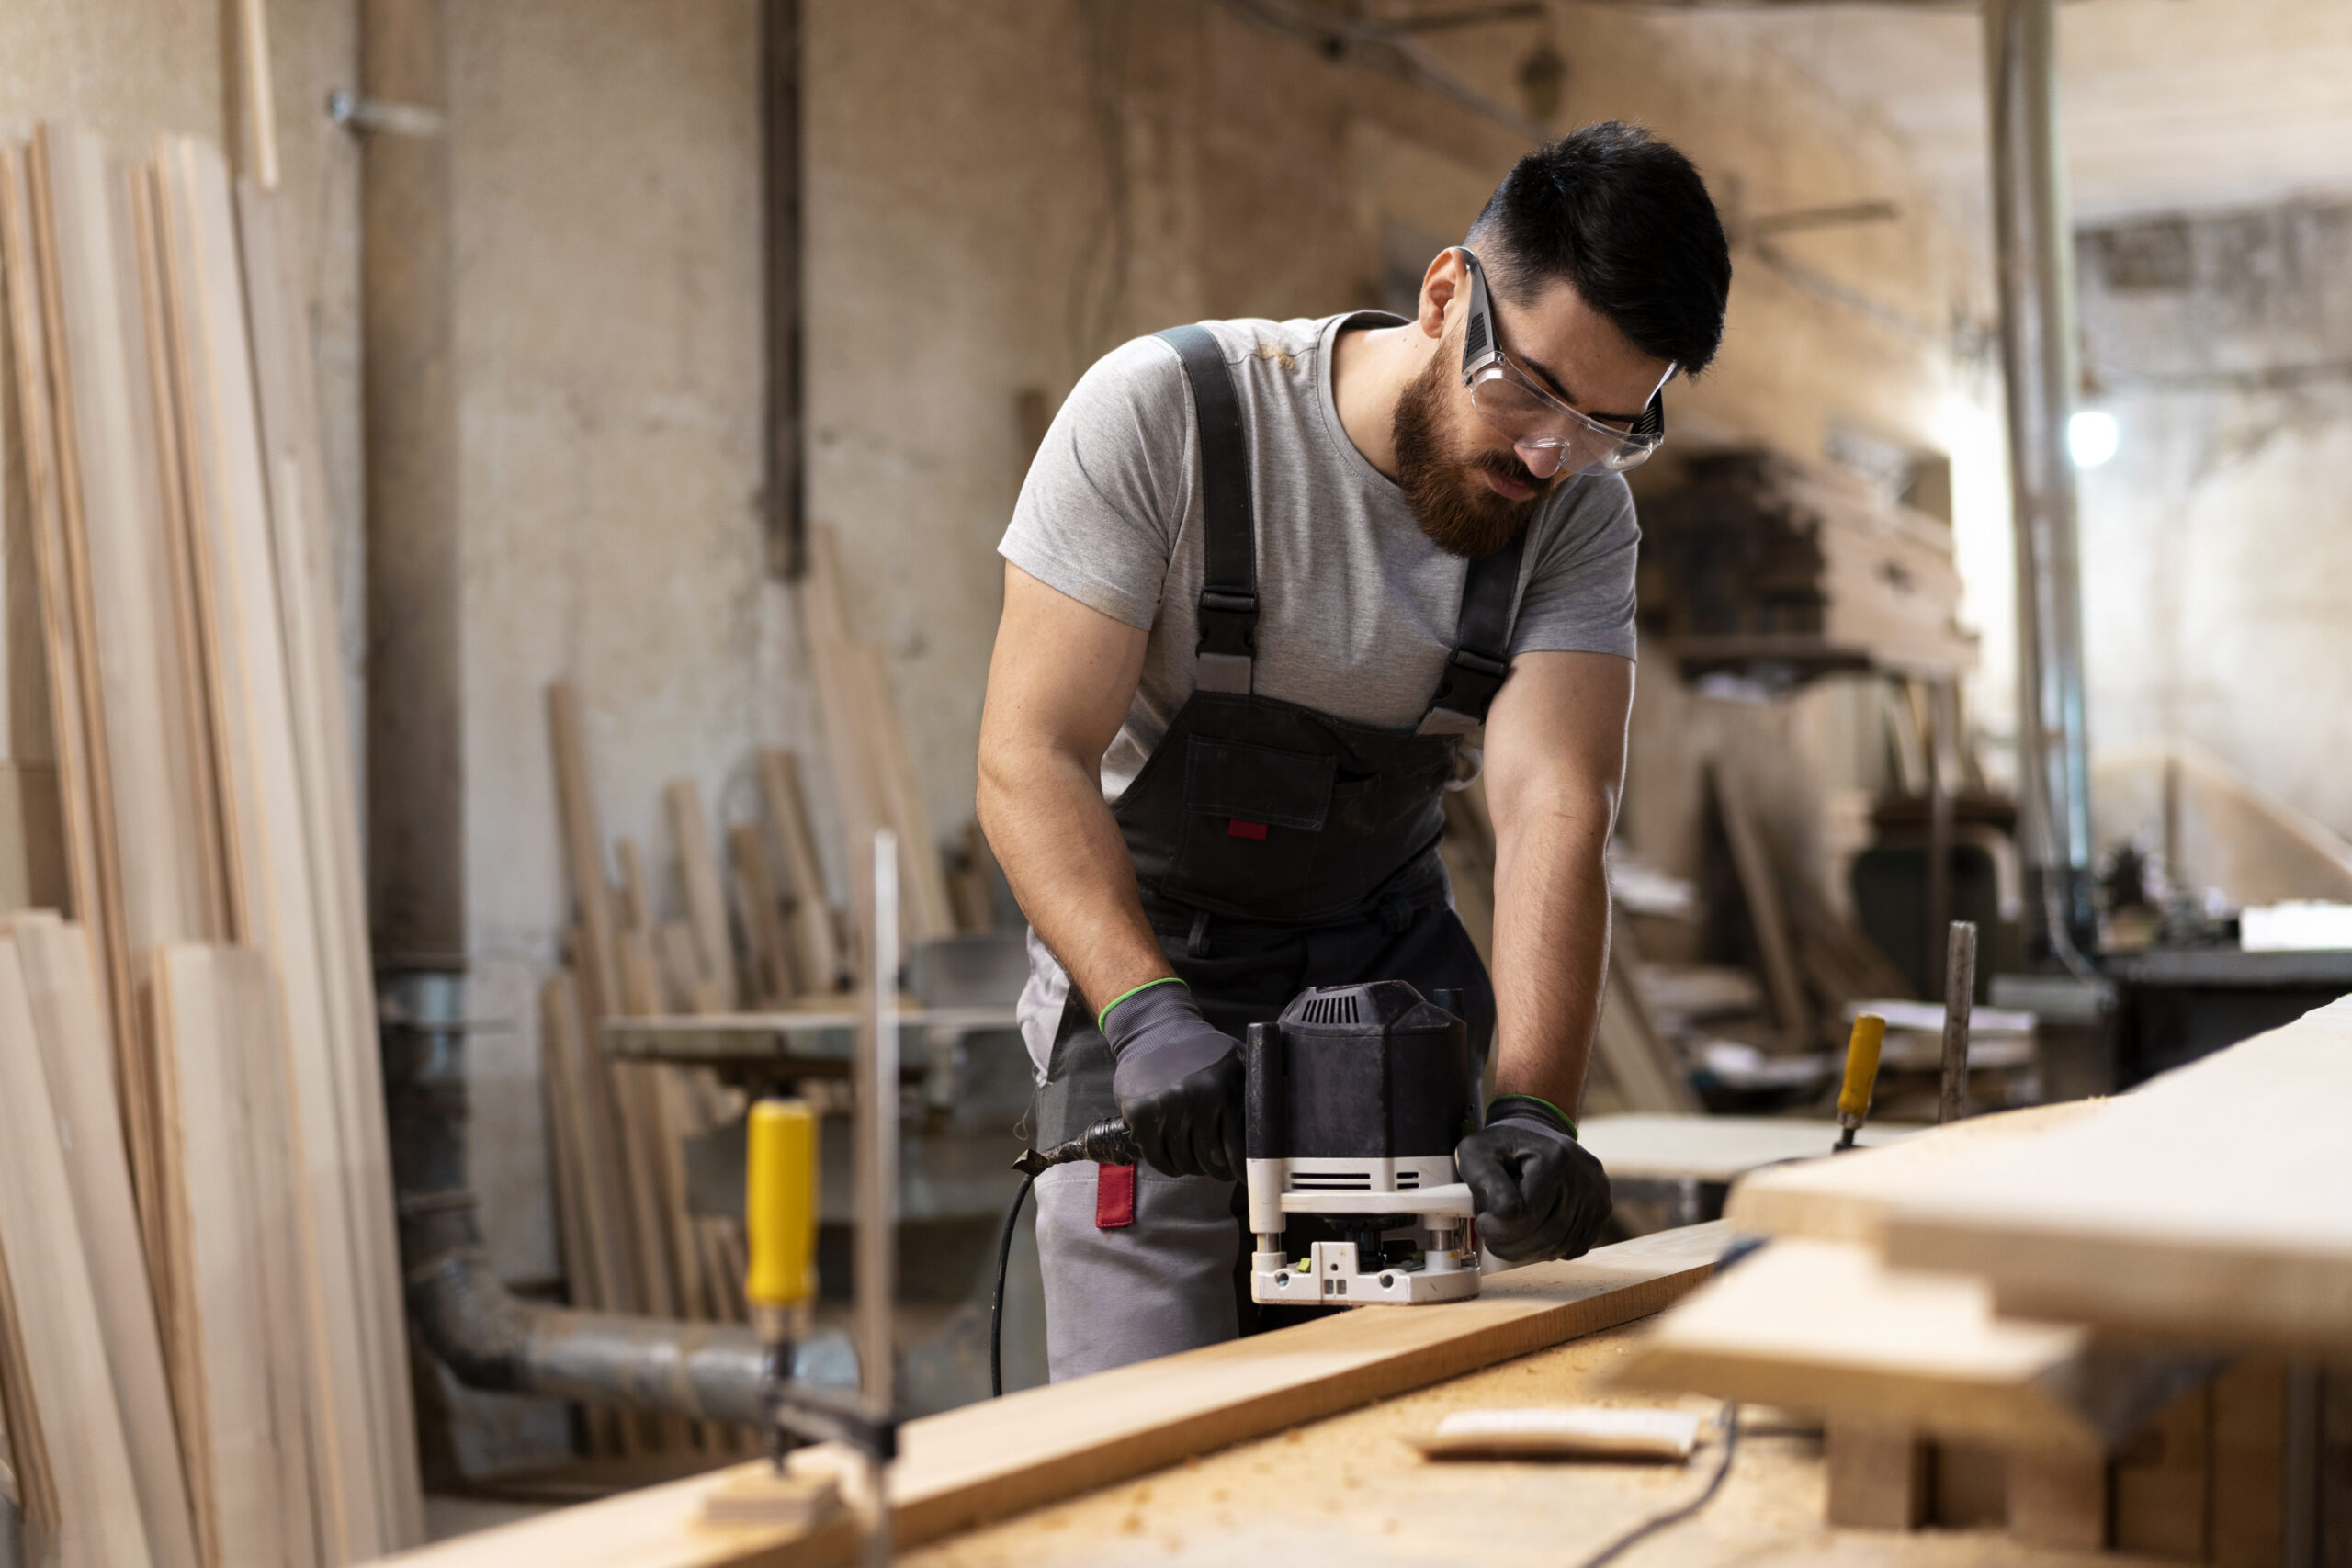 Experienced Carpenters Jobs in Australia - Apply Now